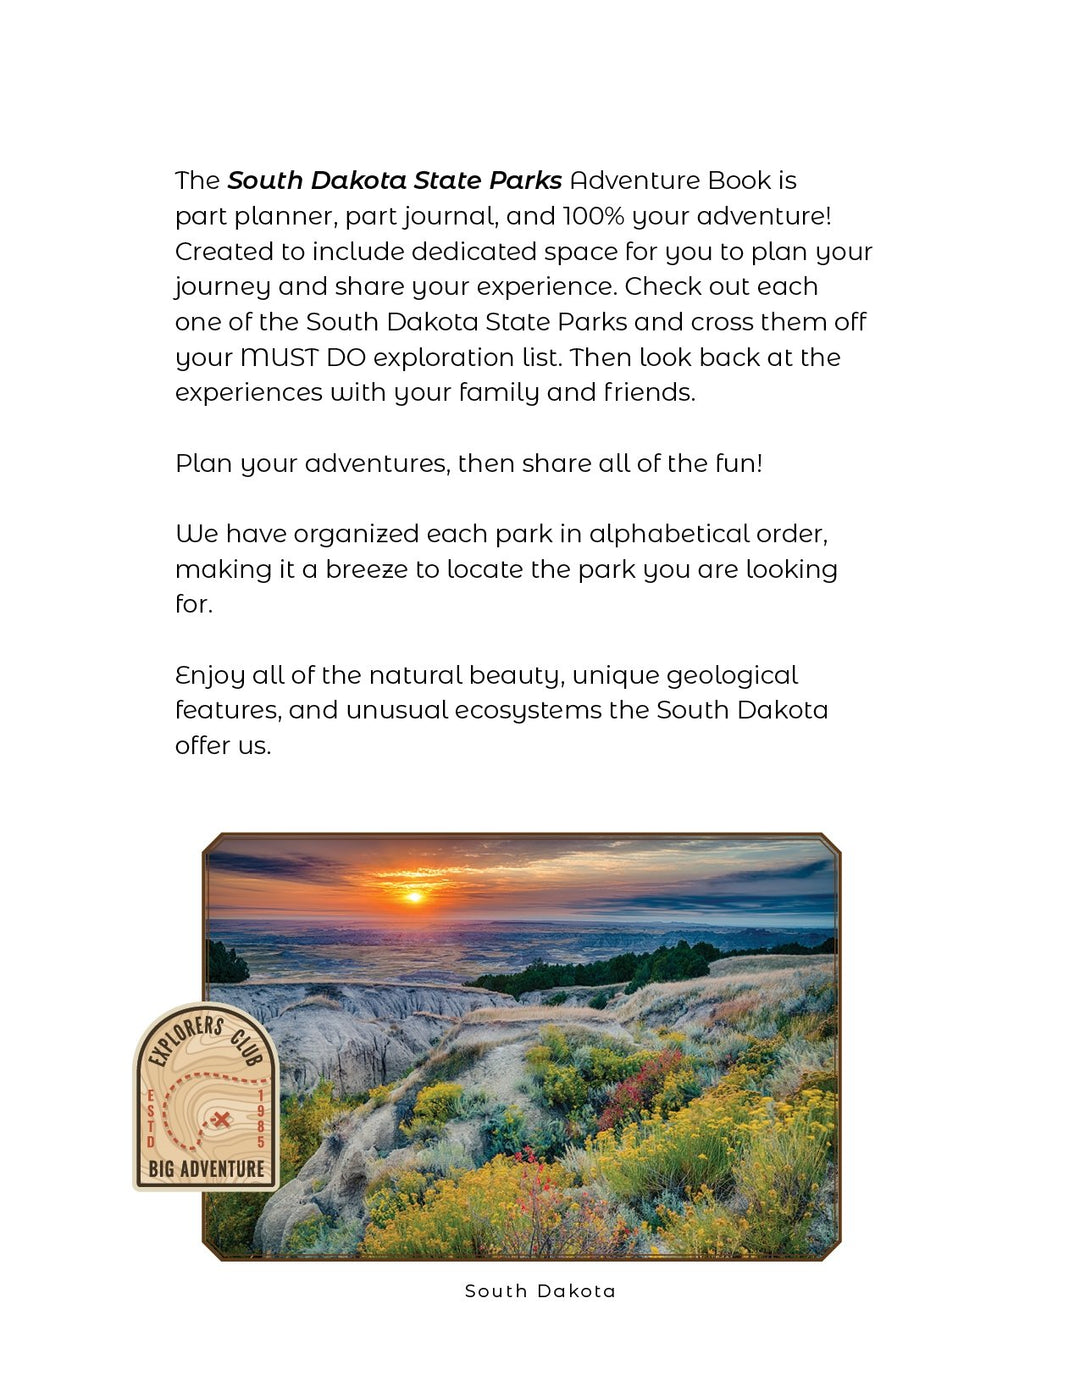 South Dakota State Parks - DIGITAL DOWNLOAD - Adventure Planning Journal - My Nature Book Adventures